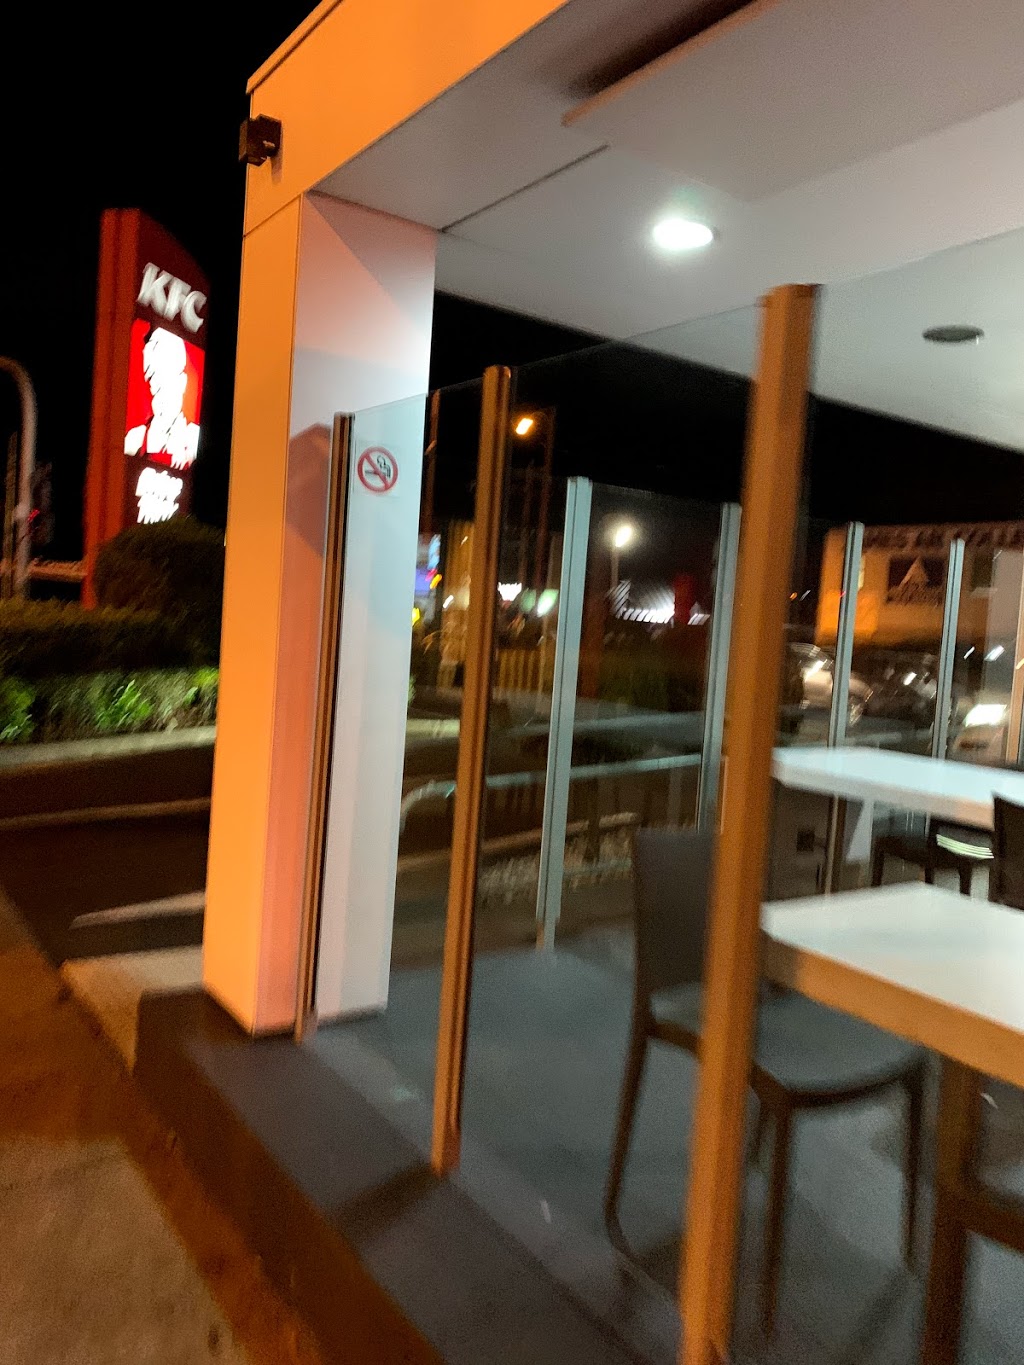 KFC Ormond | restaurant | 638 North Rd, Ormond VIC 3204, Australia | 0395781243 OR +61 3 9578 1243